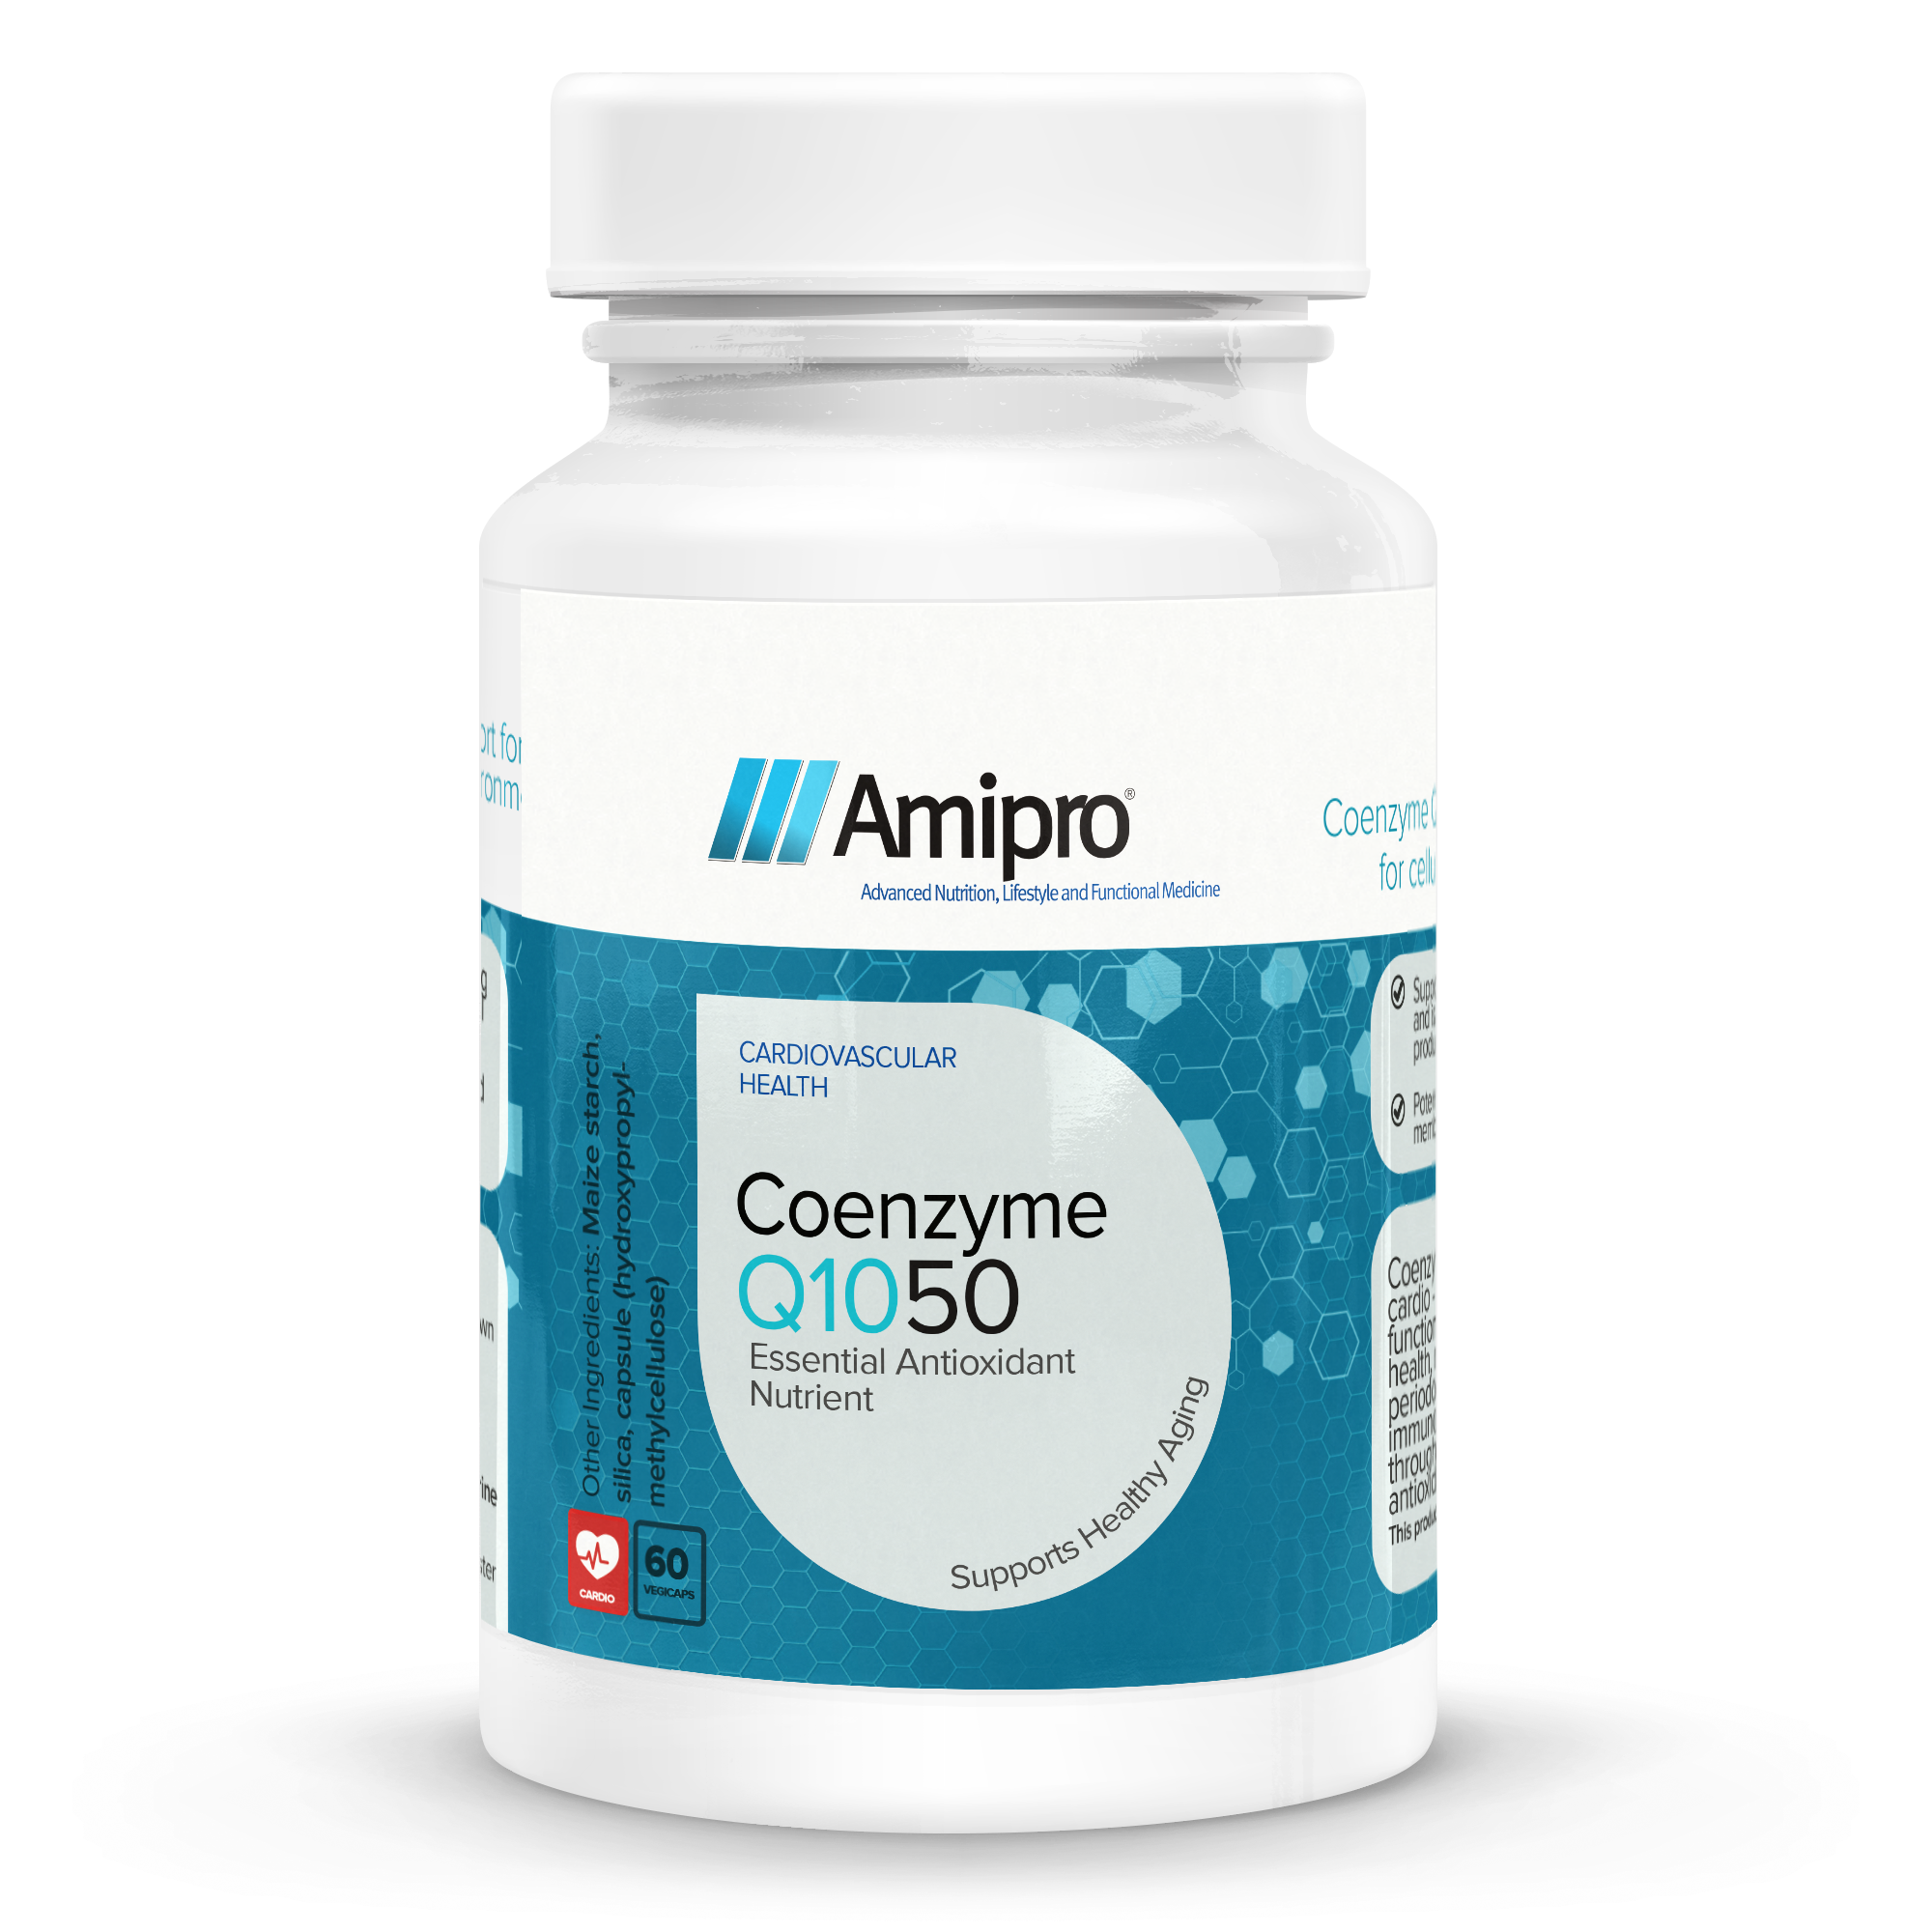 Amipro Coenzyme Q10